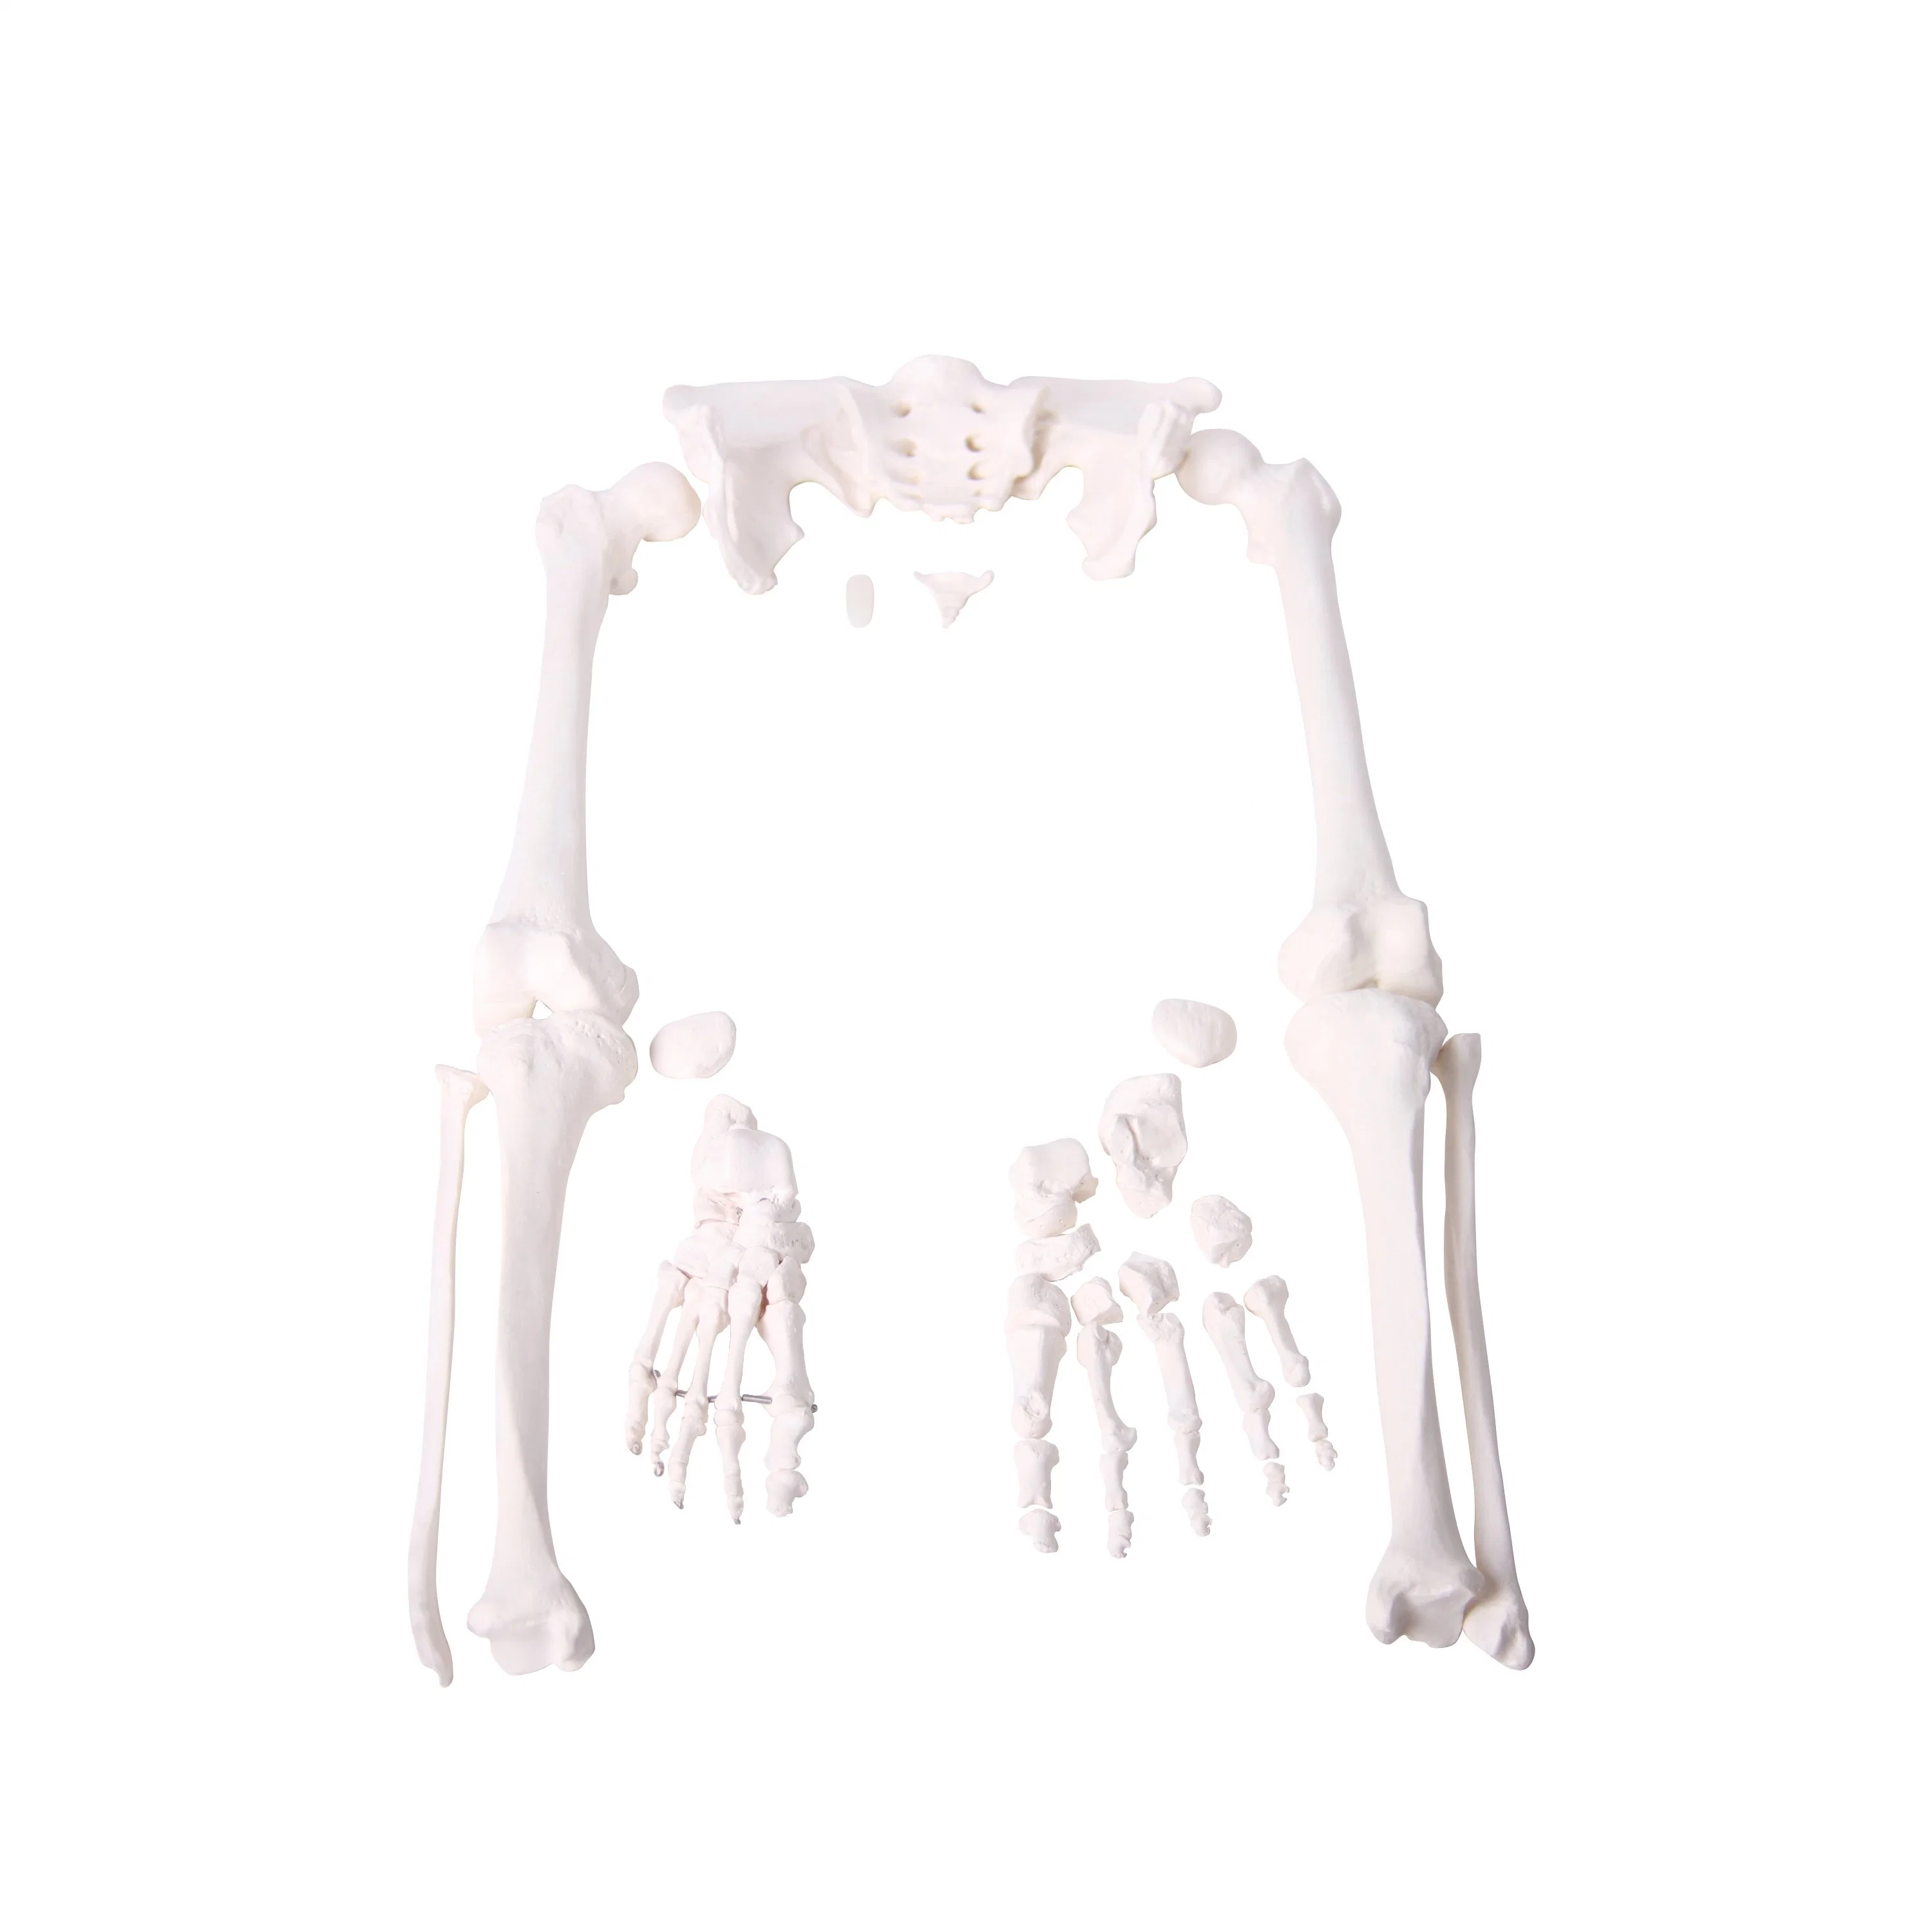 Soporte fuerte PVC Humam Modelo anatómico cuerpo humano Skeleton mitad Del Modelo